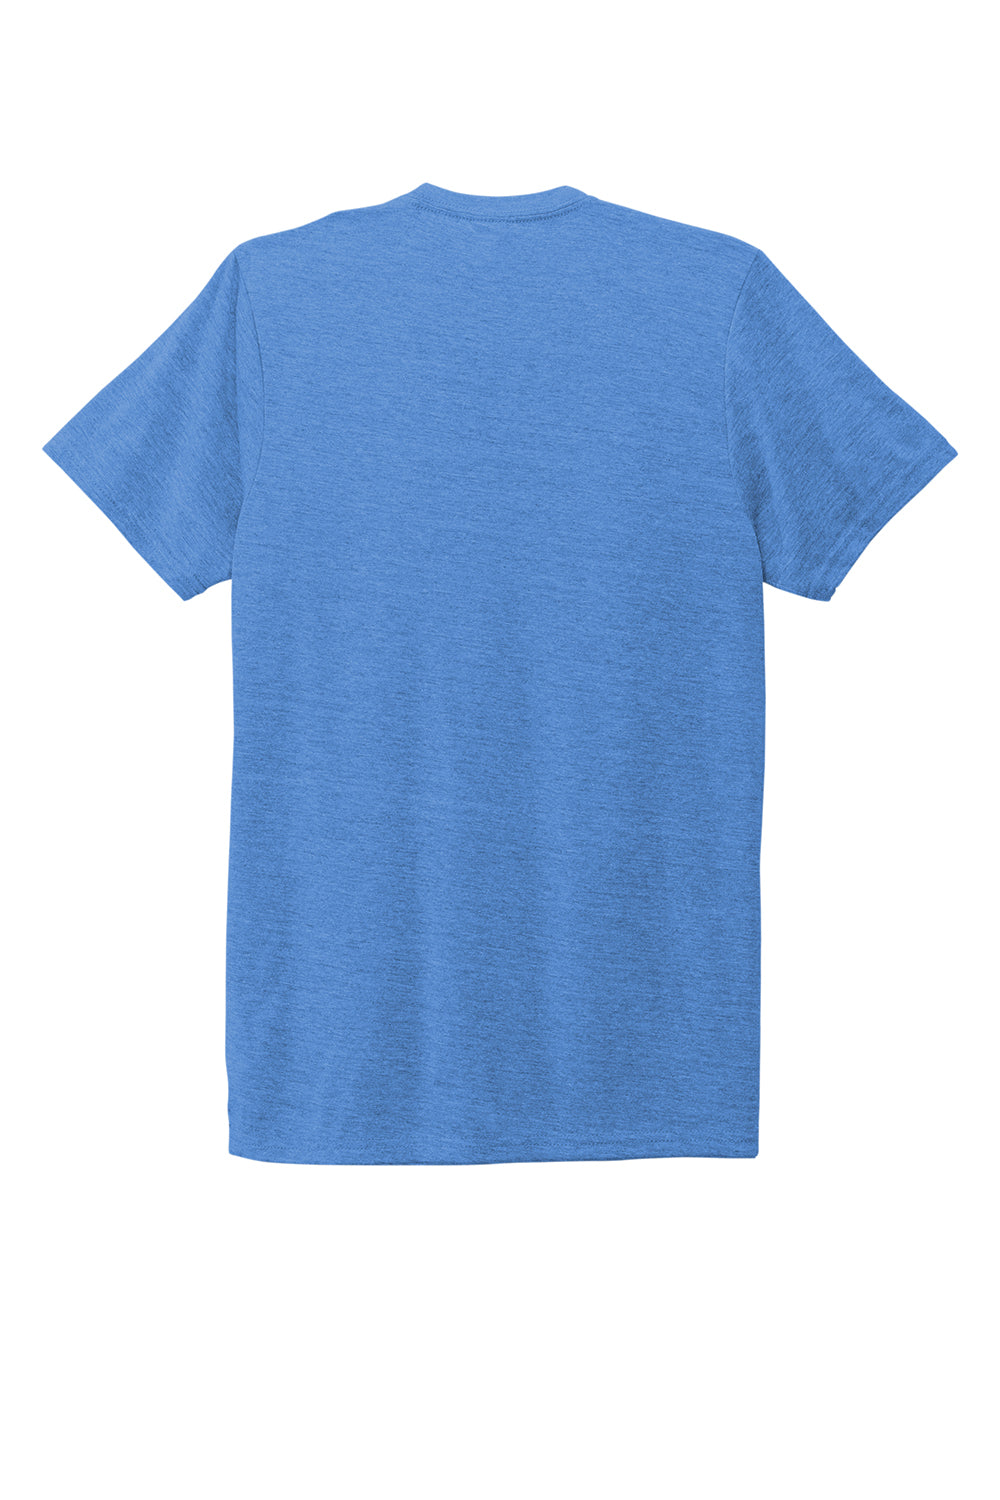 Allmade AL2004 Mens Short Sleeve Crewneck T-Shirt Azure Blue Flat Back